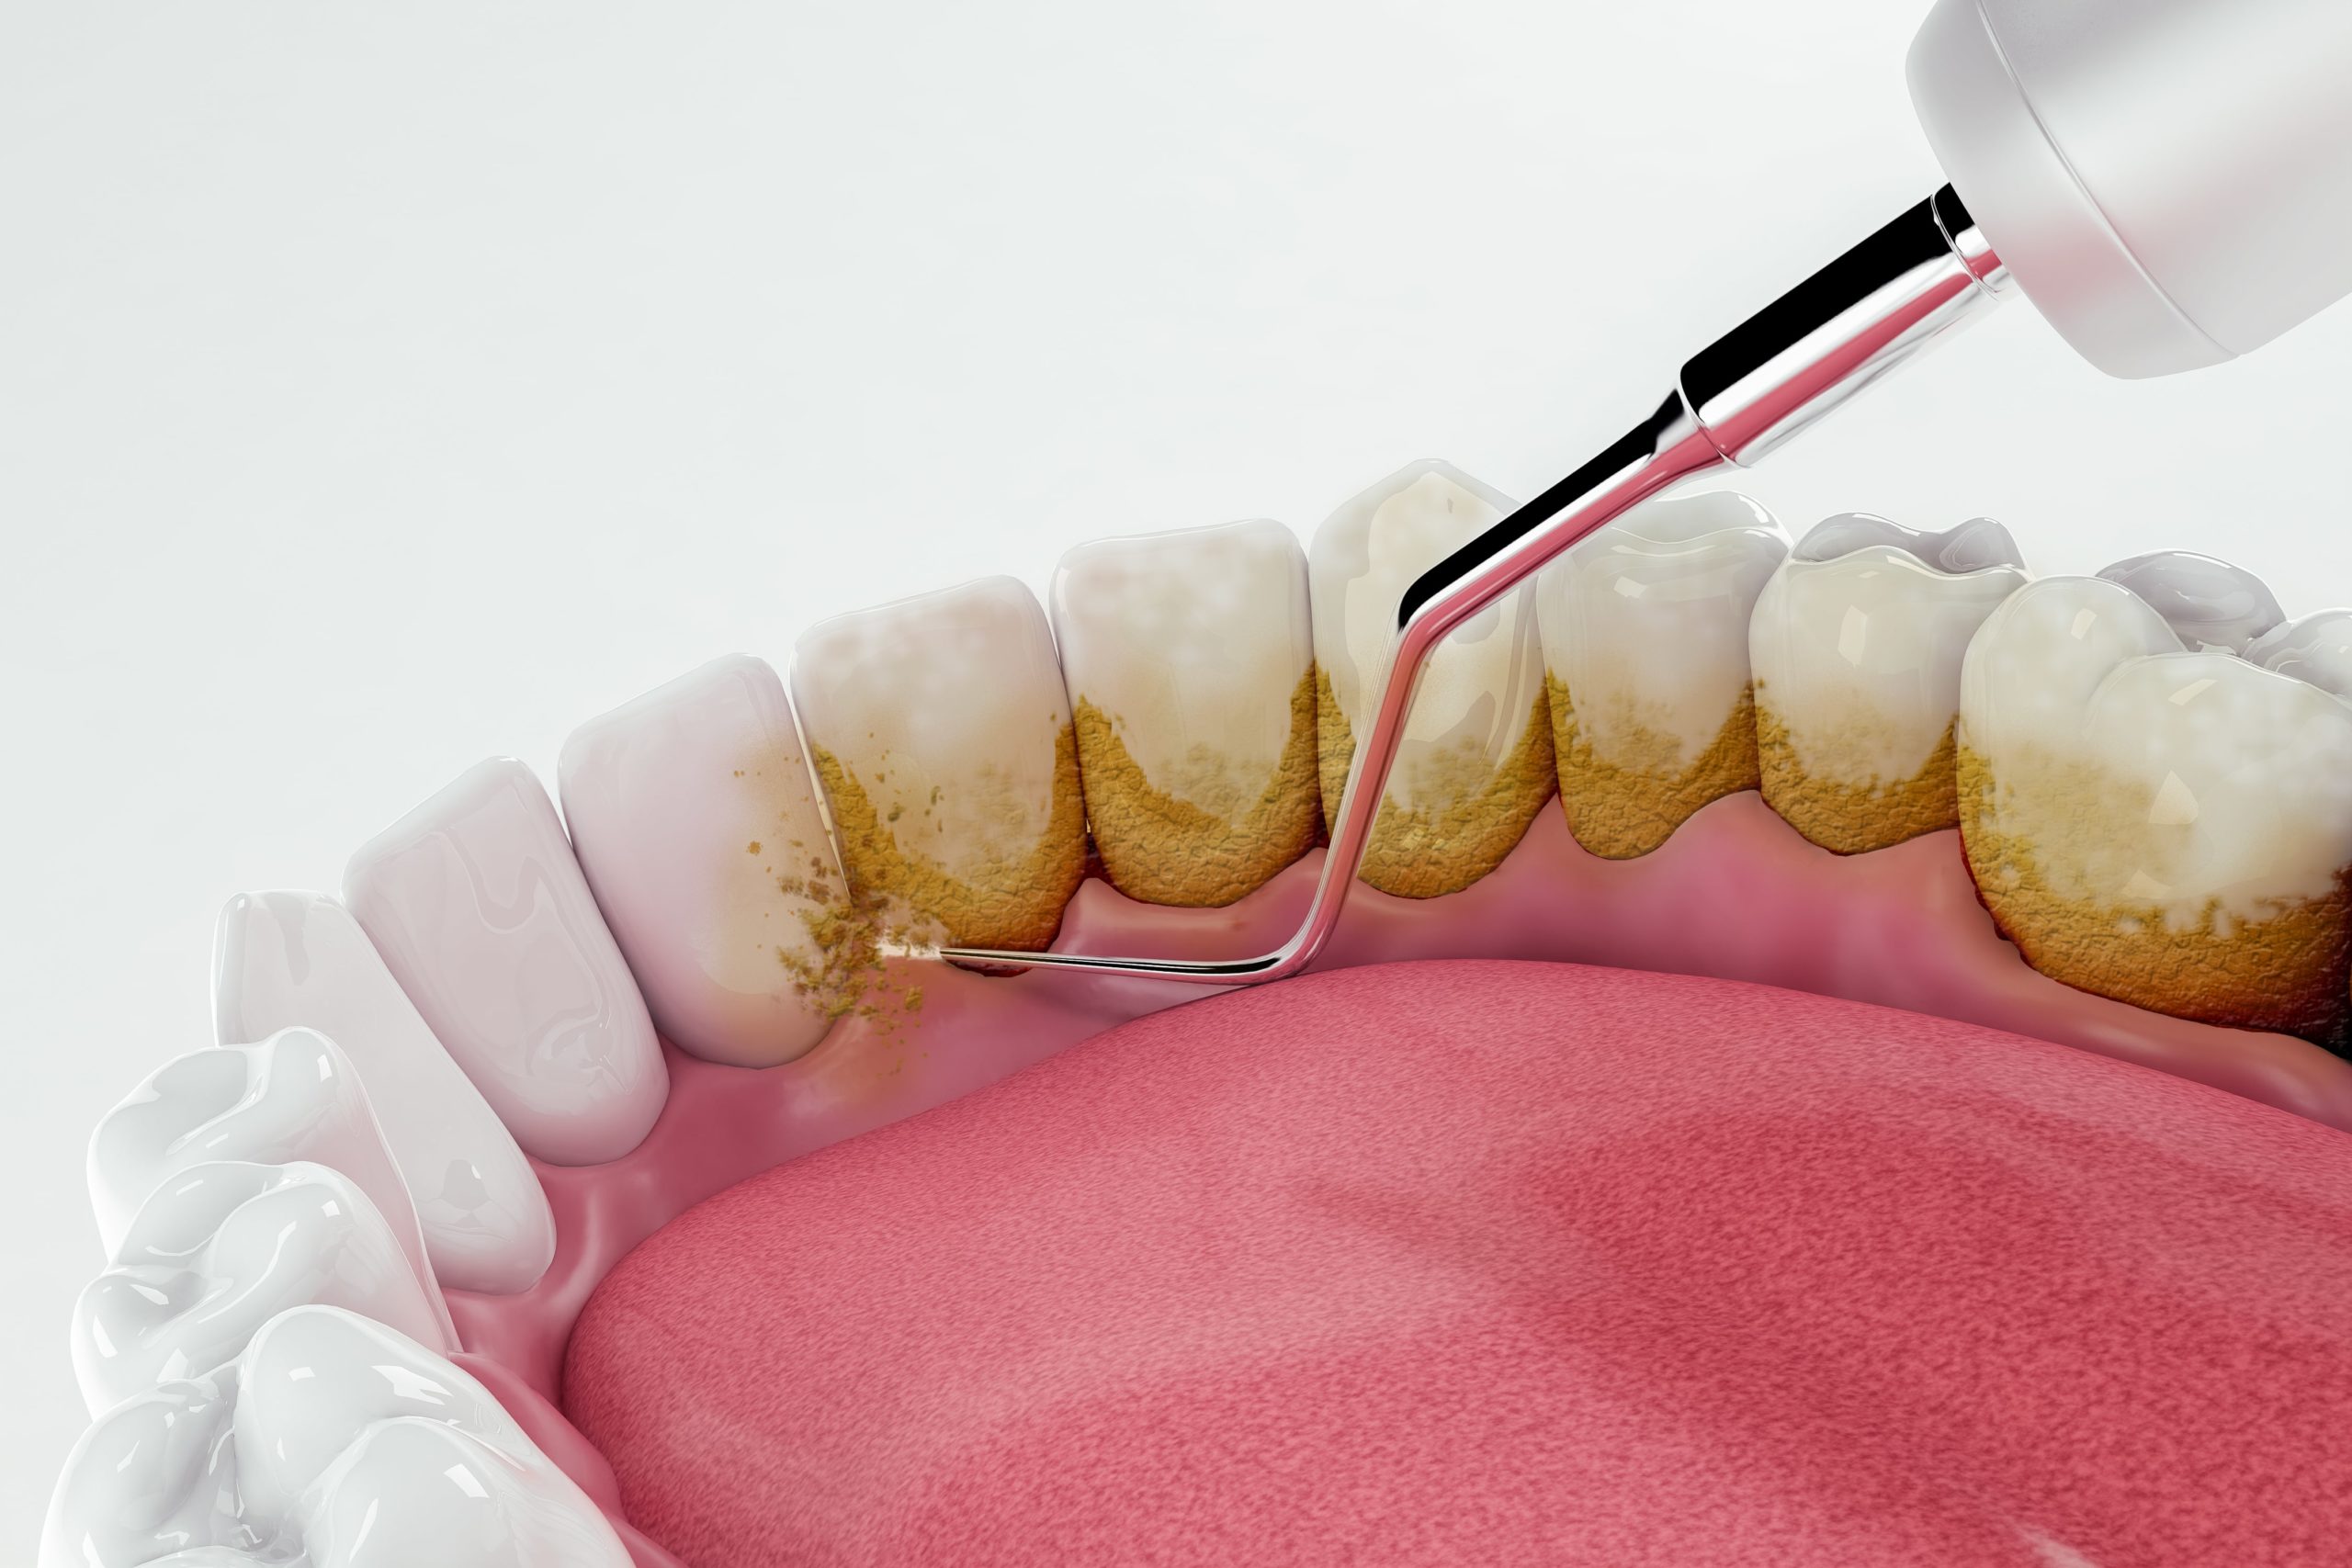 Dental Hygiene - Kensington Court Clinic - Sub Header Image - removing plaque